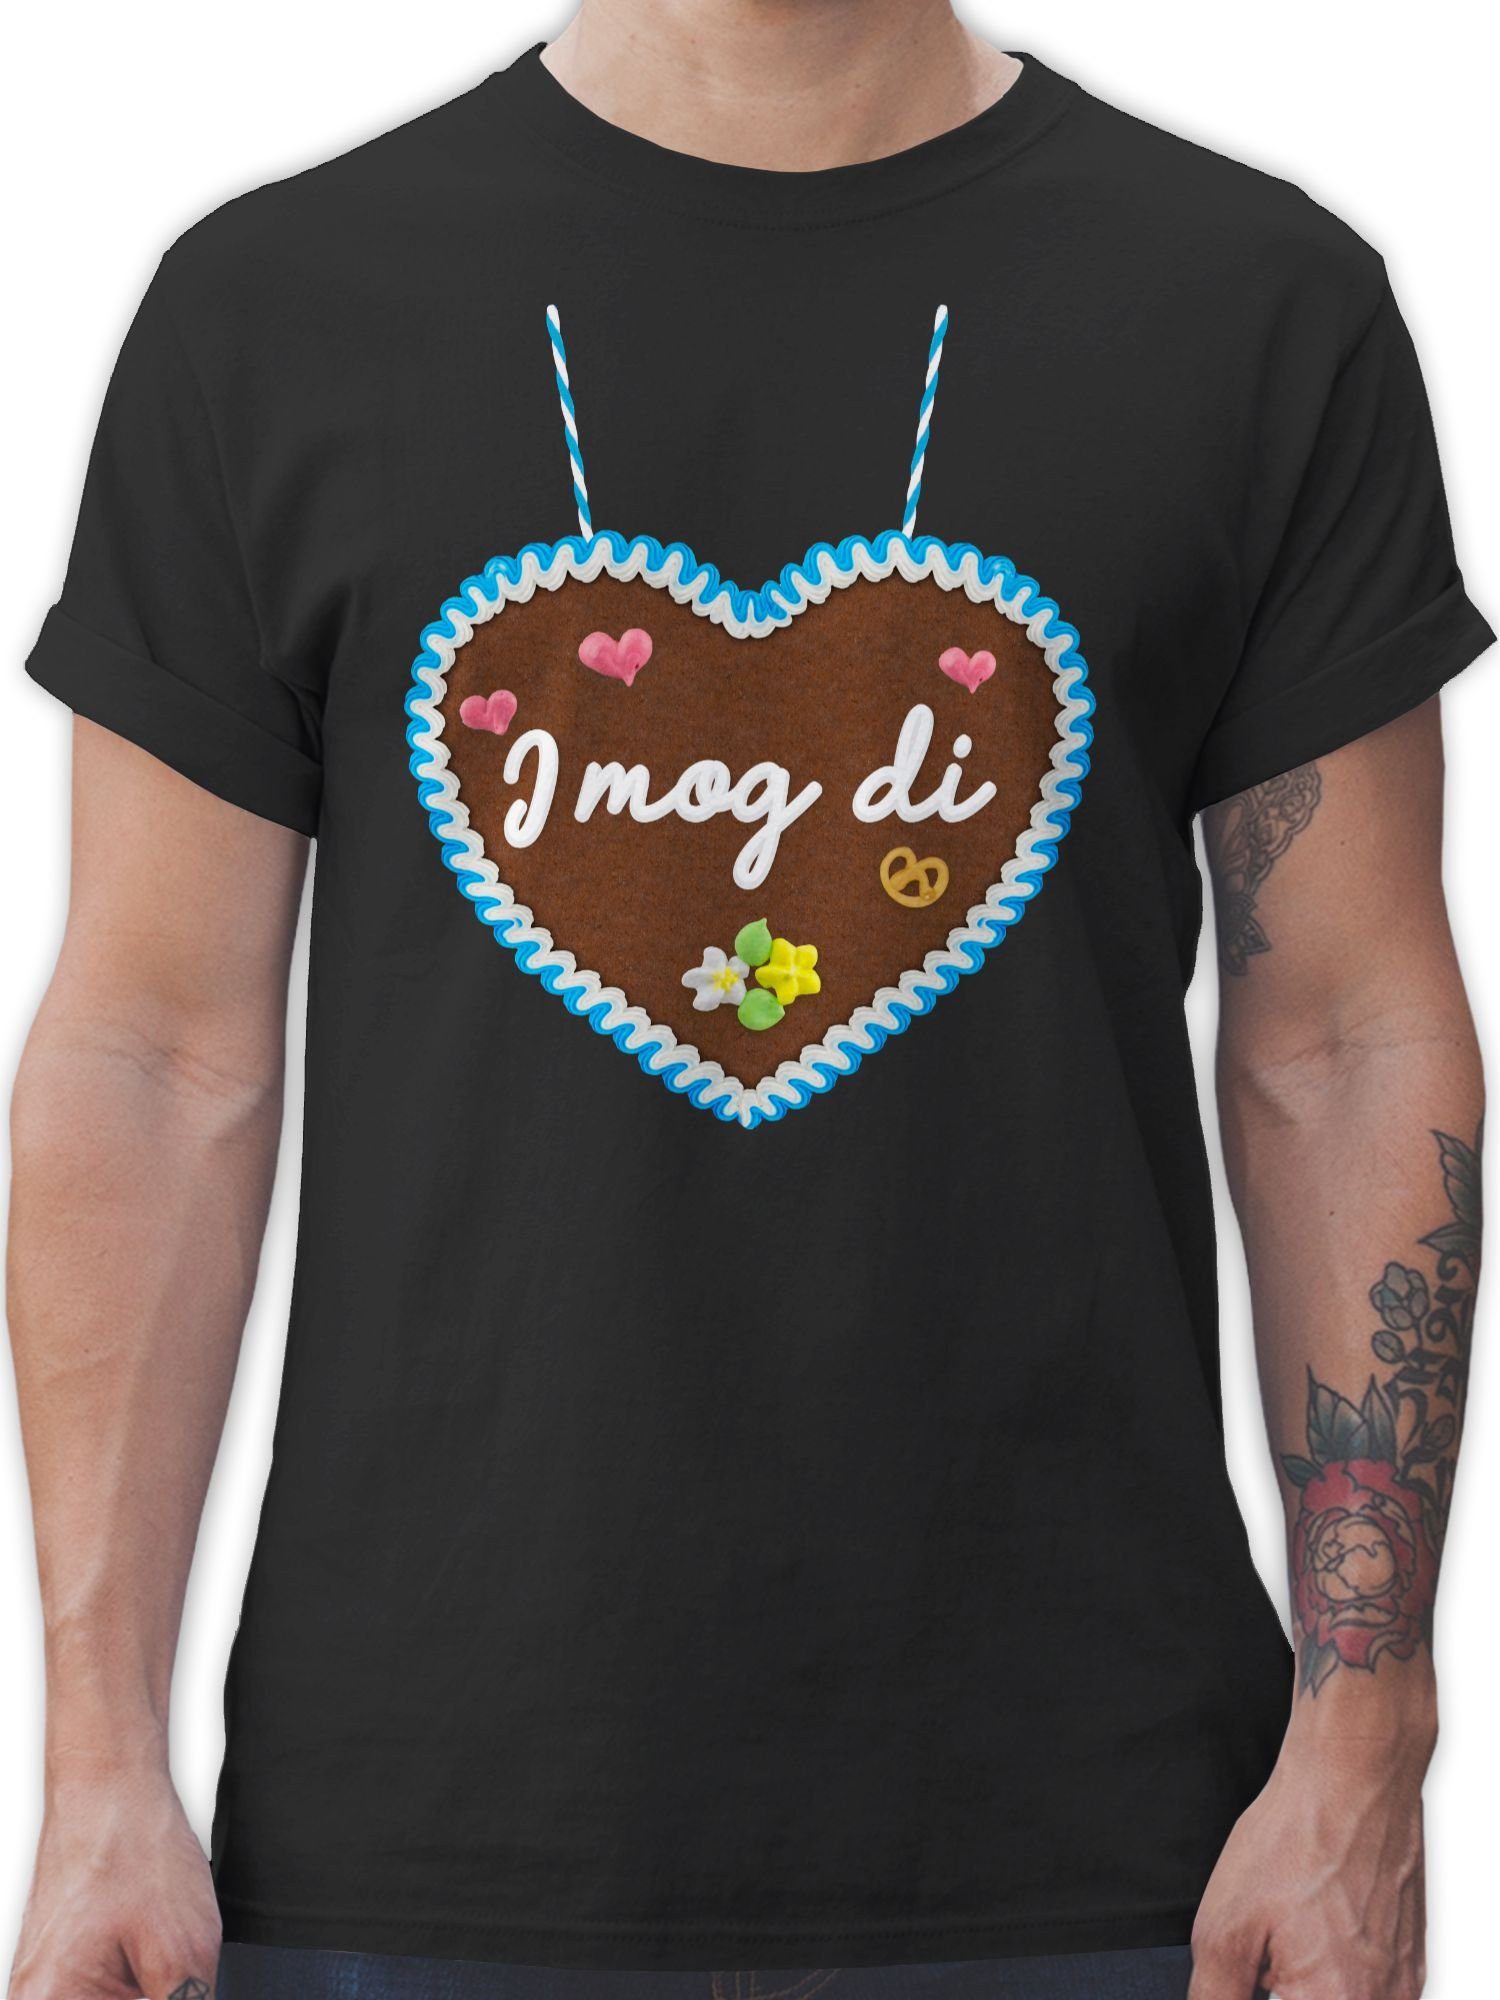 Shirtracer T-Shirt I mog di - Lebkuchenherz - Gänseblümchen Butterblume Herzen Mode für Oktoberfest Herren 01 Schwarz